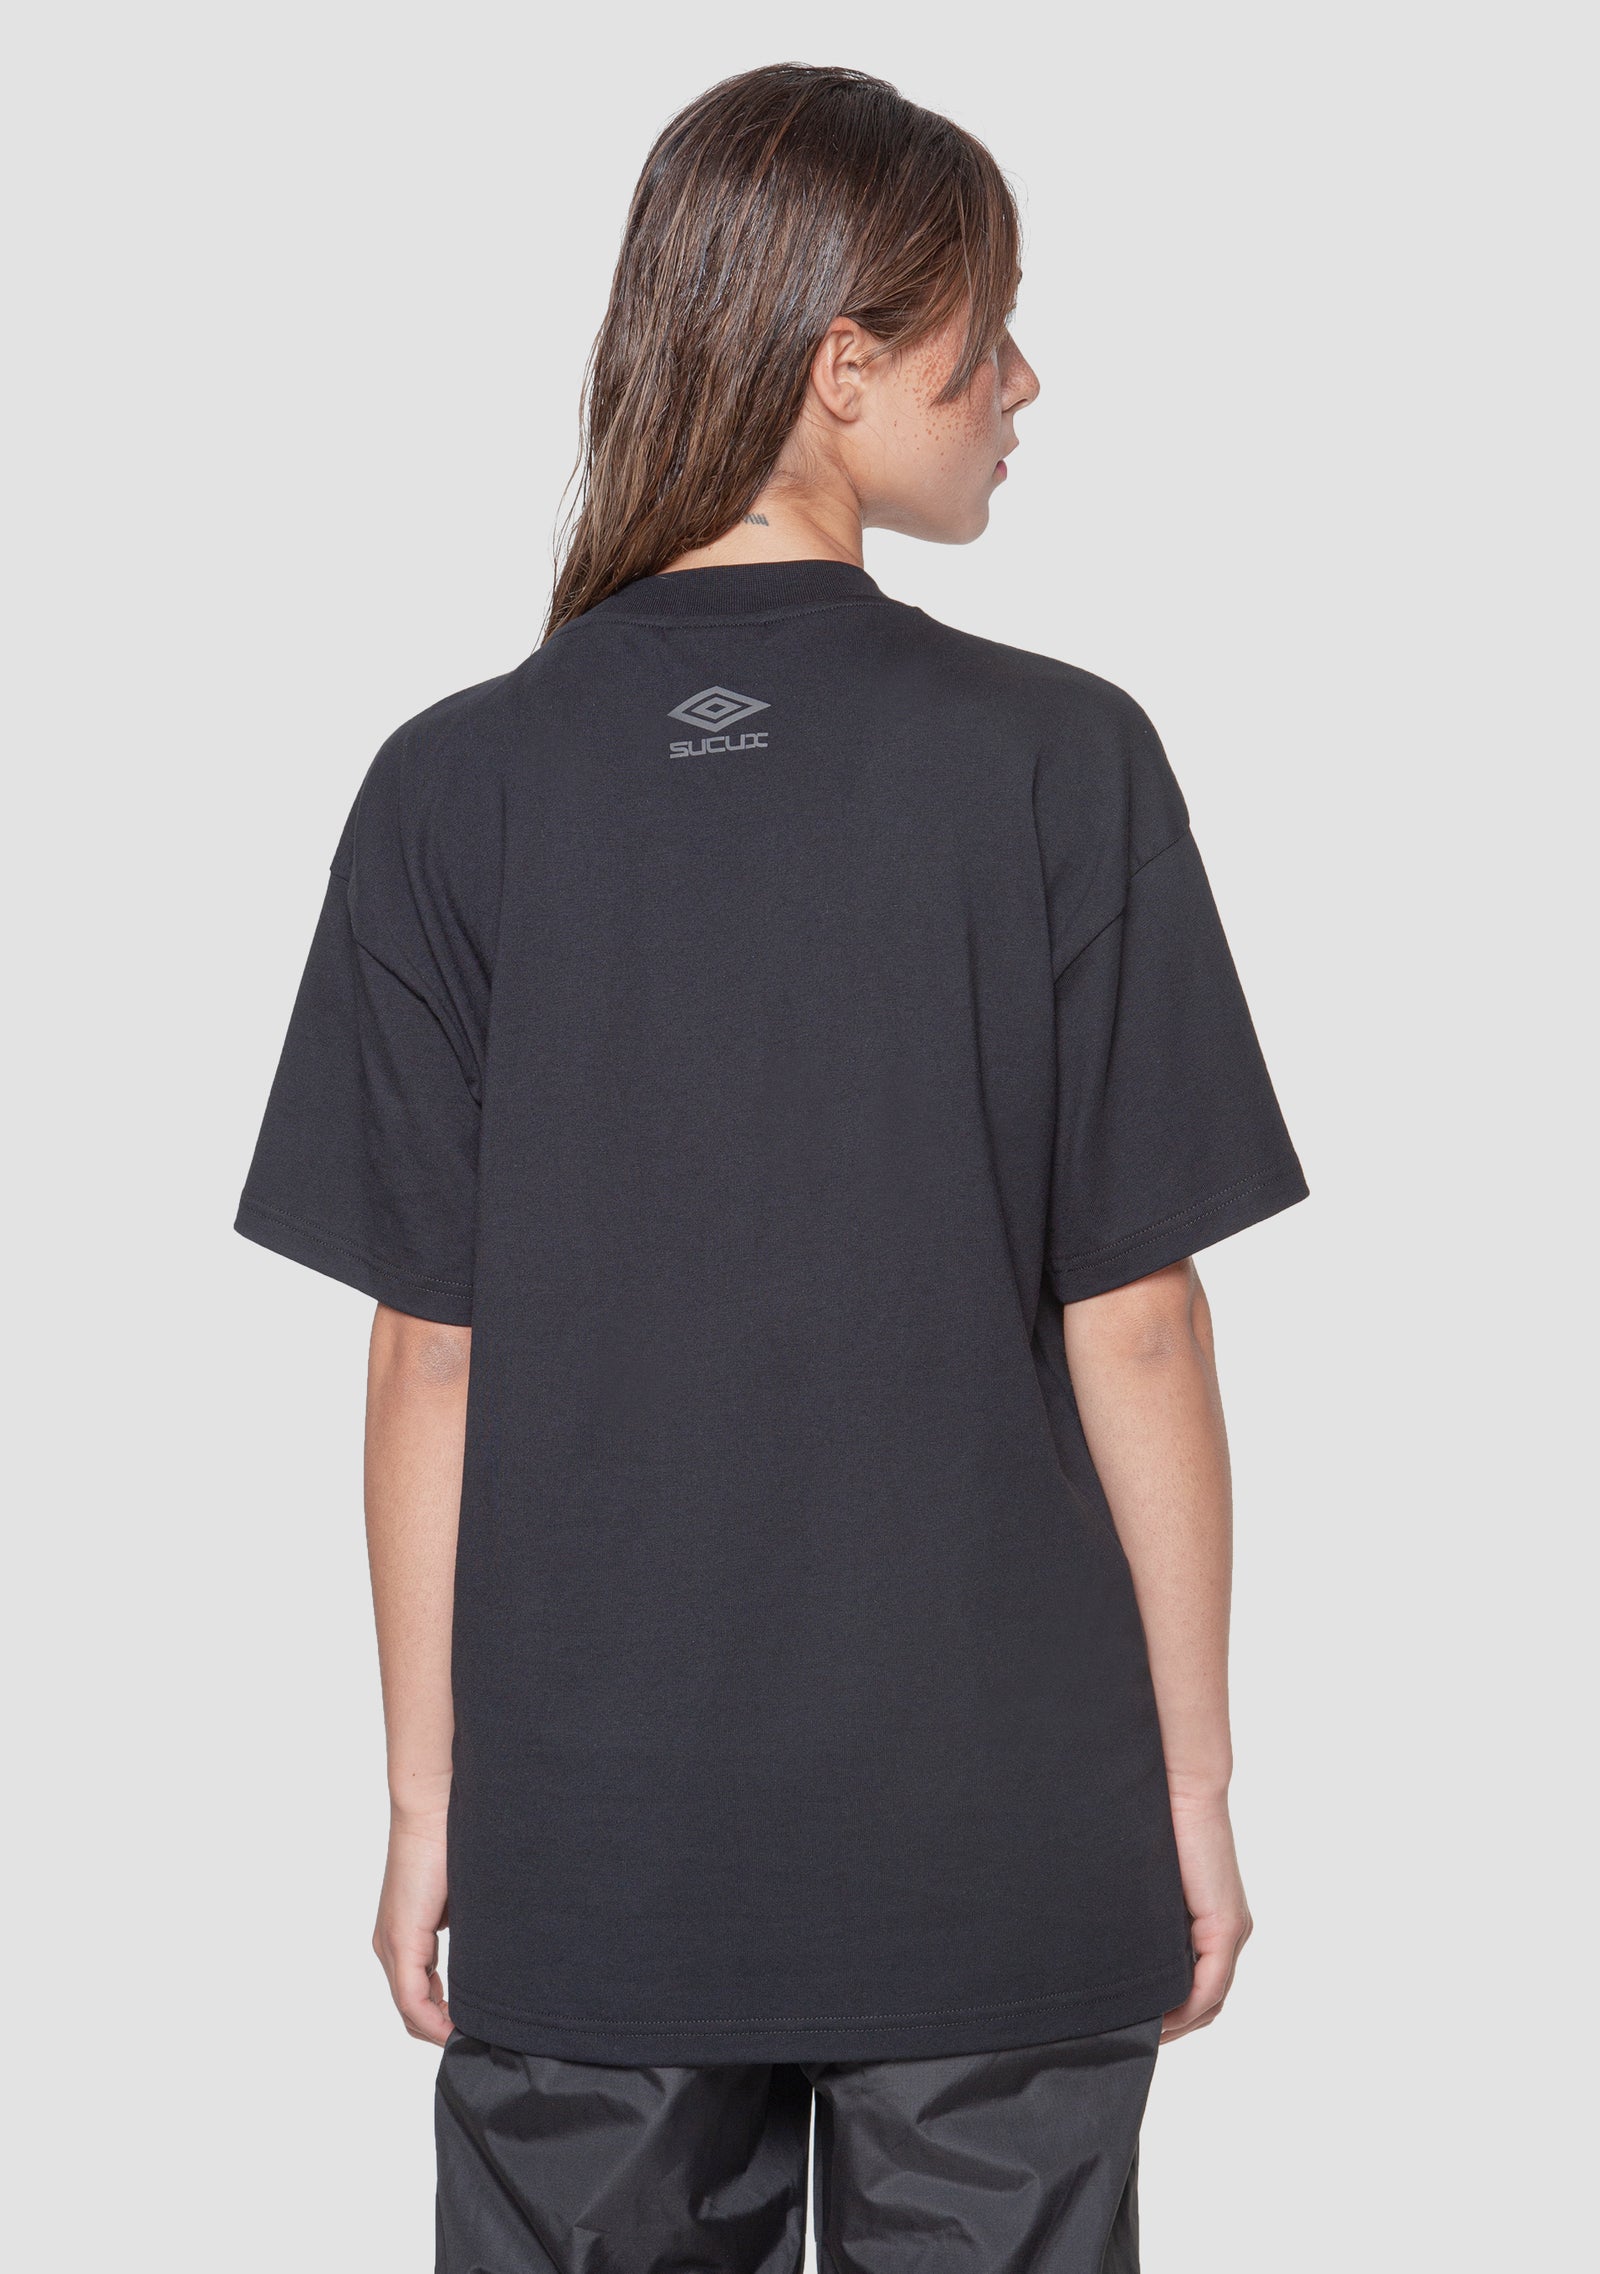 Umbro X Sucux Oversize T-Shirt Black